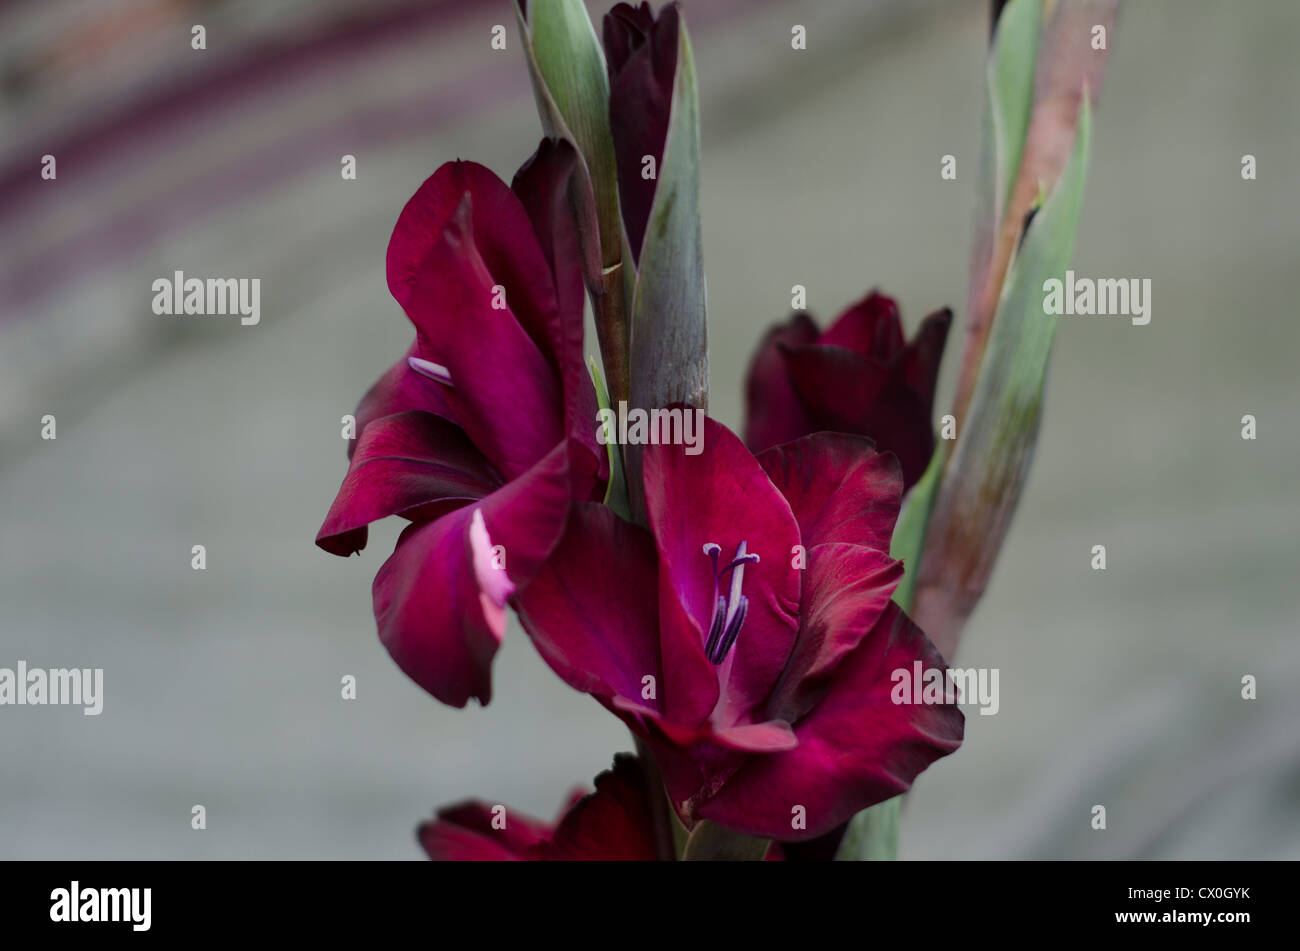 Profondo rosso-borgogna Gladiola - Iridaceae Gladioli-Gladiolus steli su morbido sfondo grigio Foto Stock